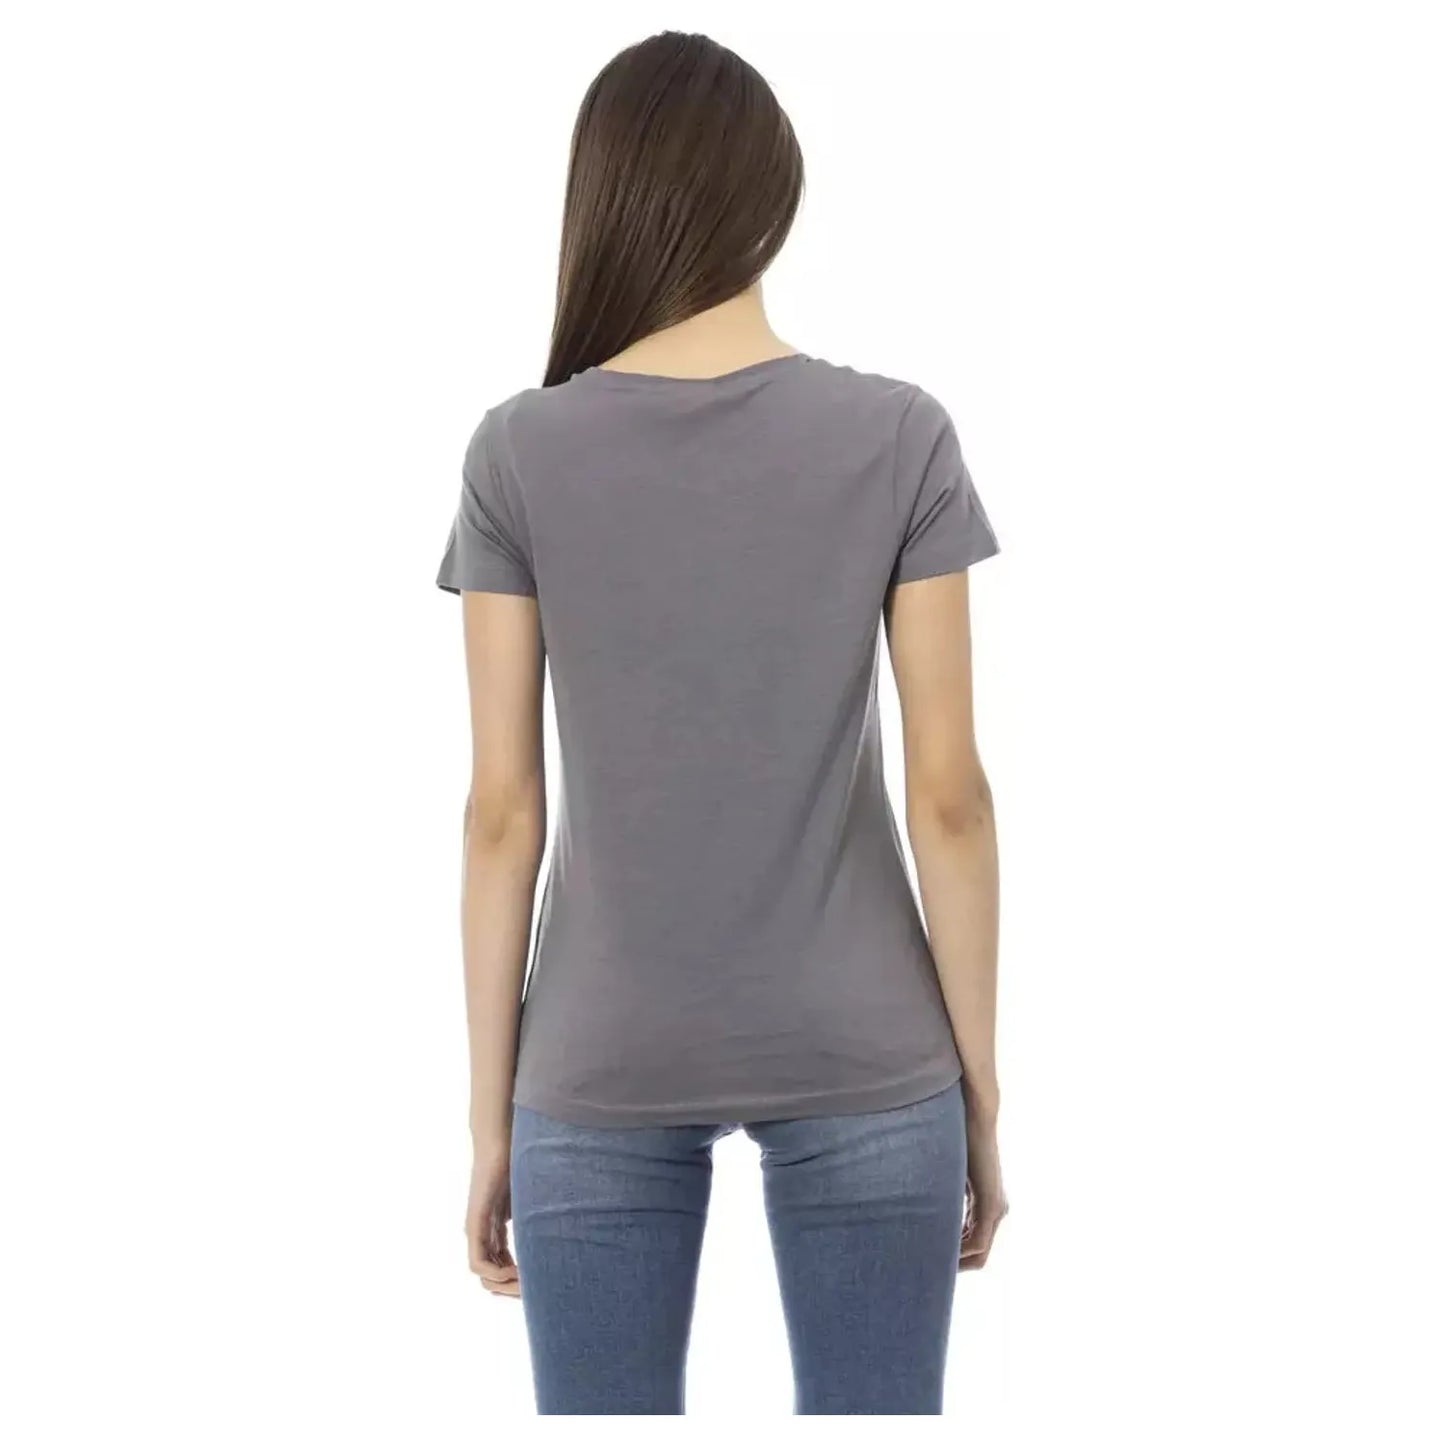 Trussardi Action Elegant Grey Short Sleeve Chic Tee gray-cotton-tops-t-shirt-14